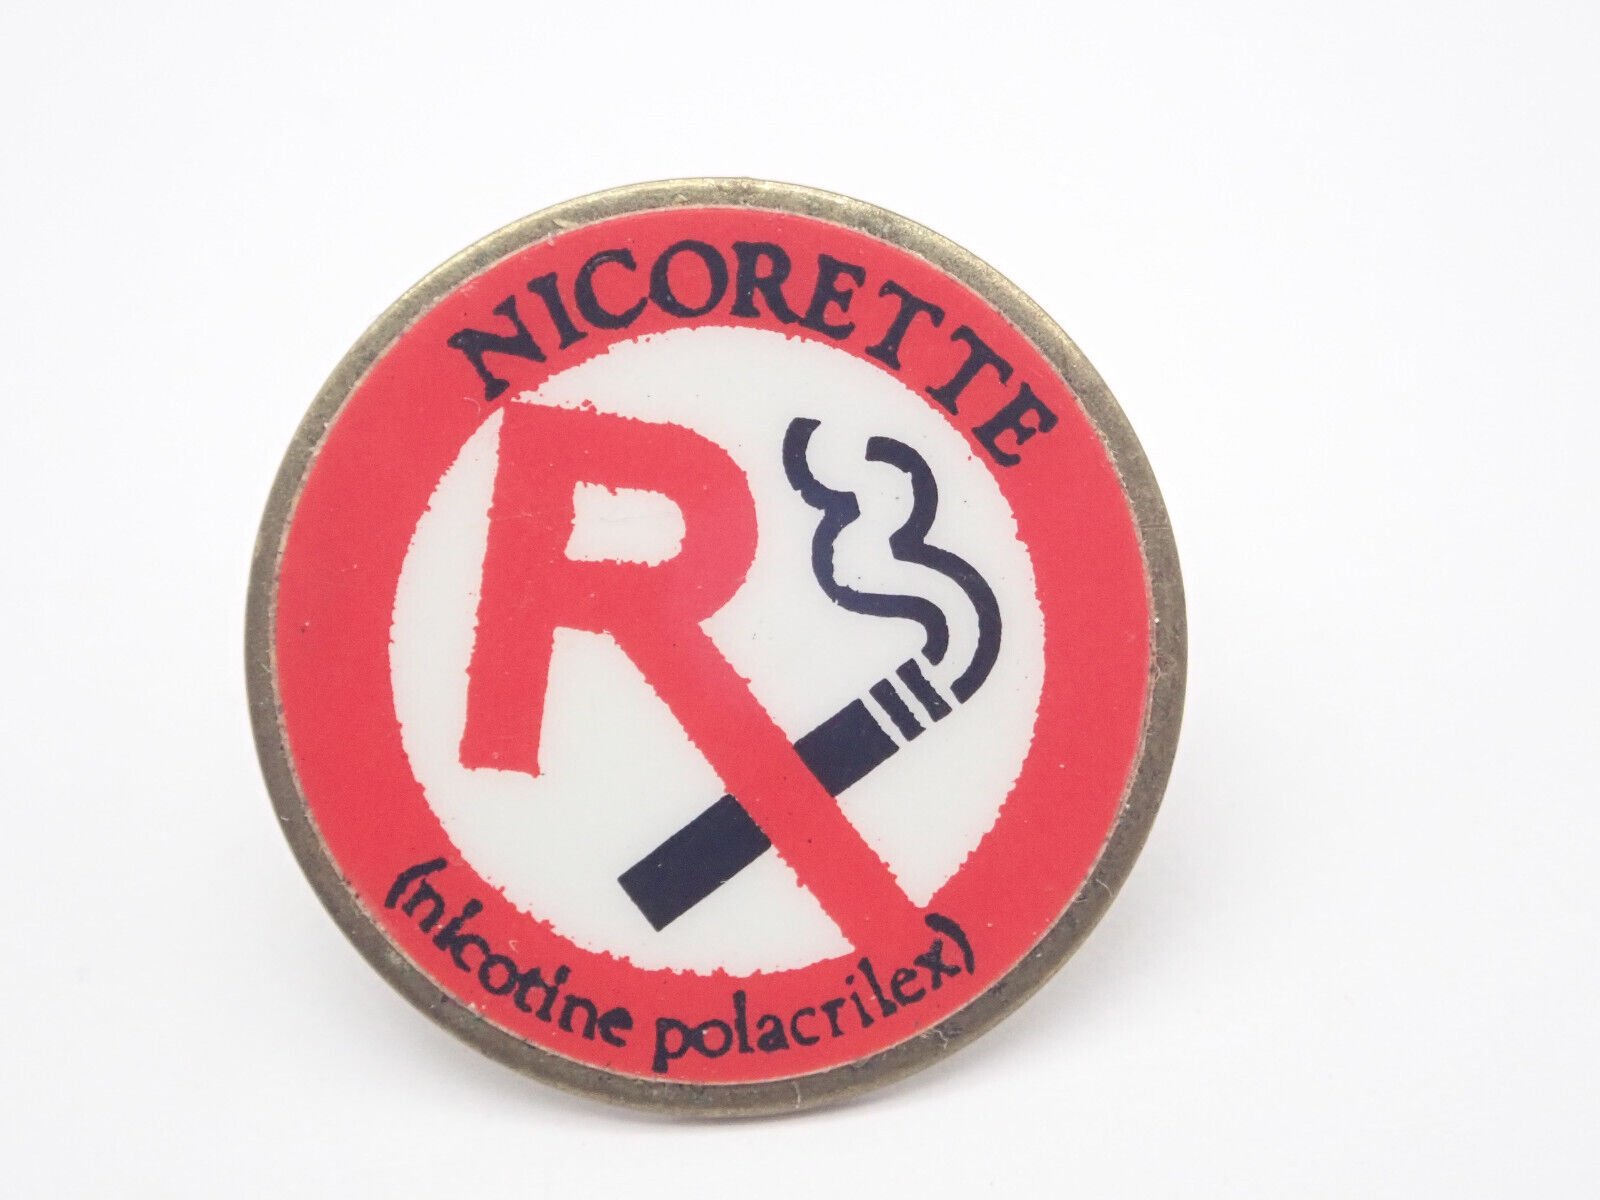 Nicorette Nicotine Polacrilex Vintage Lapel Pin